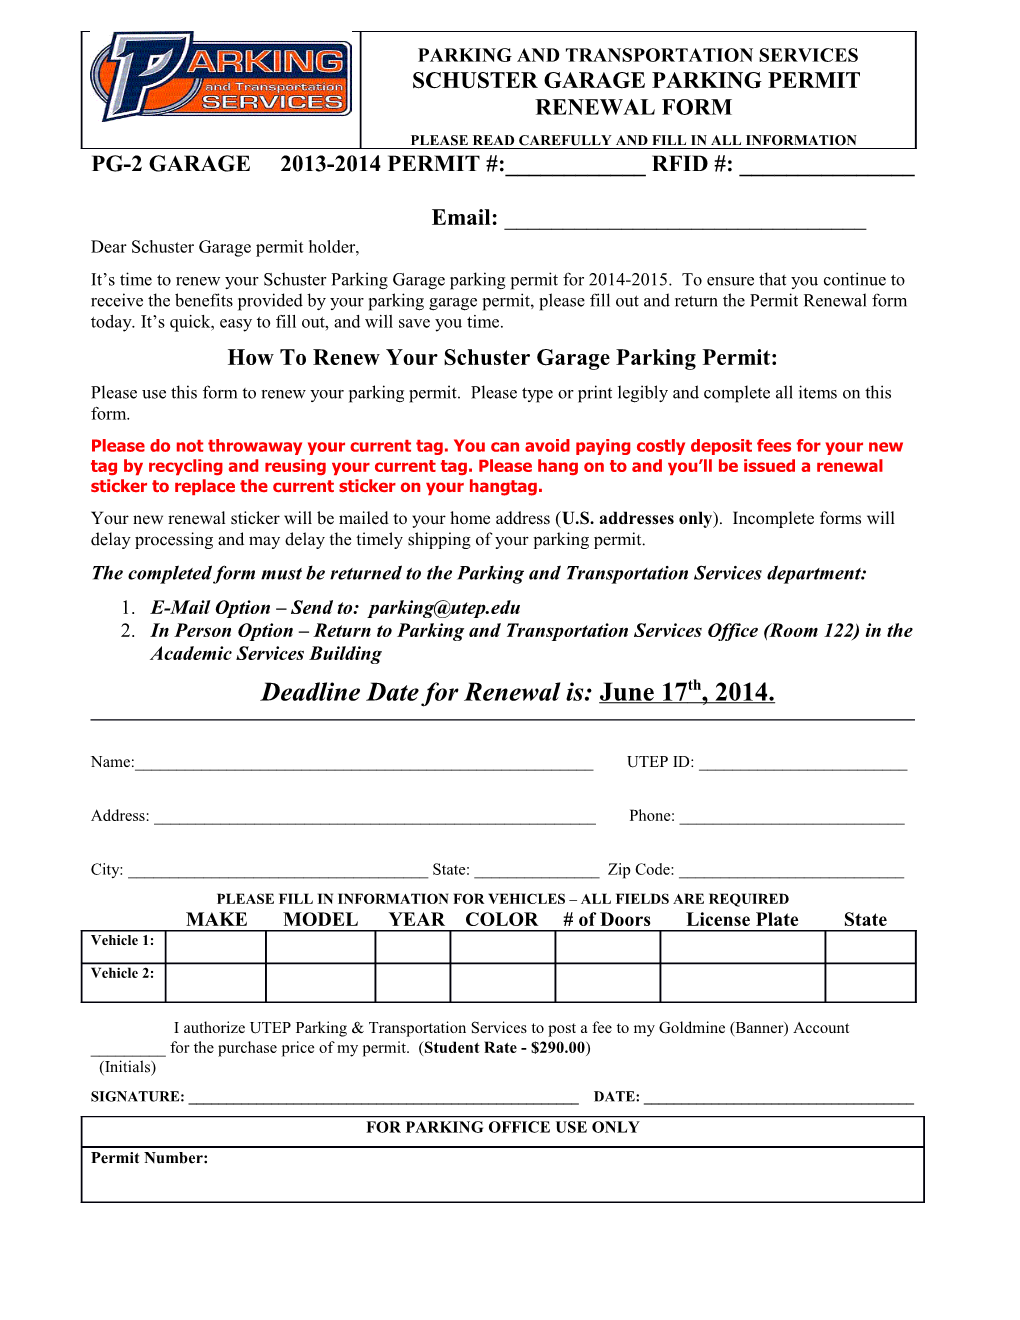 Parking and Transportation Services Schuster Garage Parking Permit Renewal Form Please